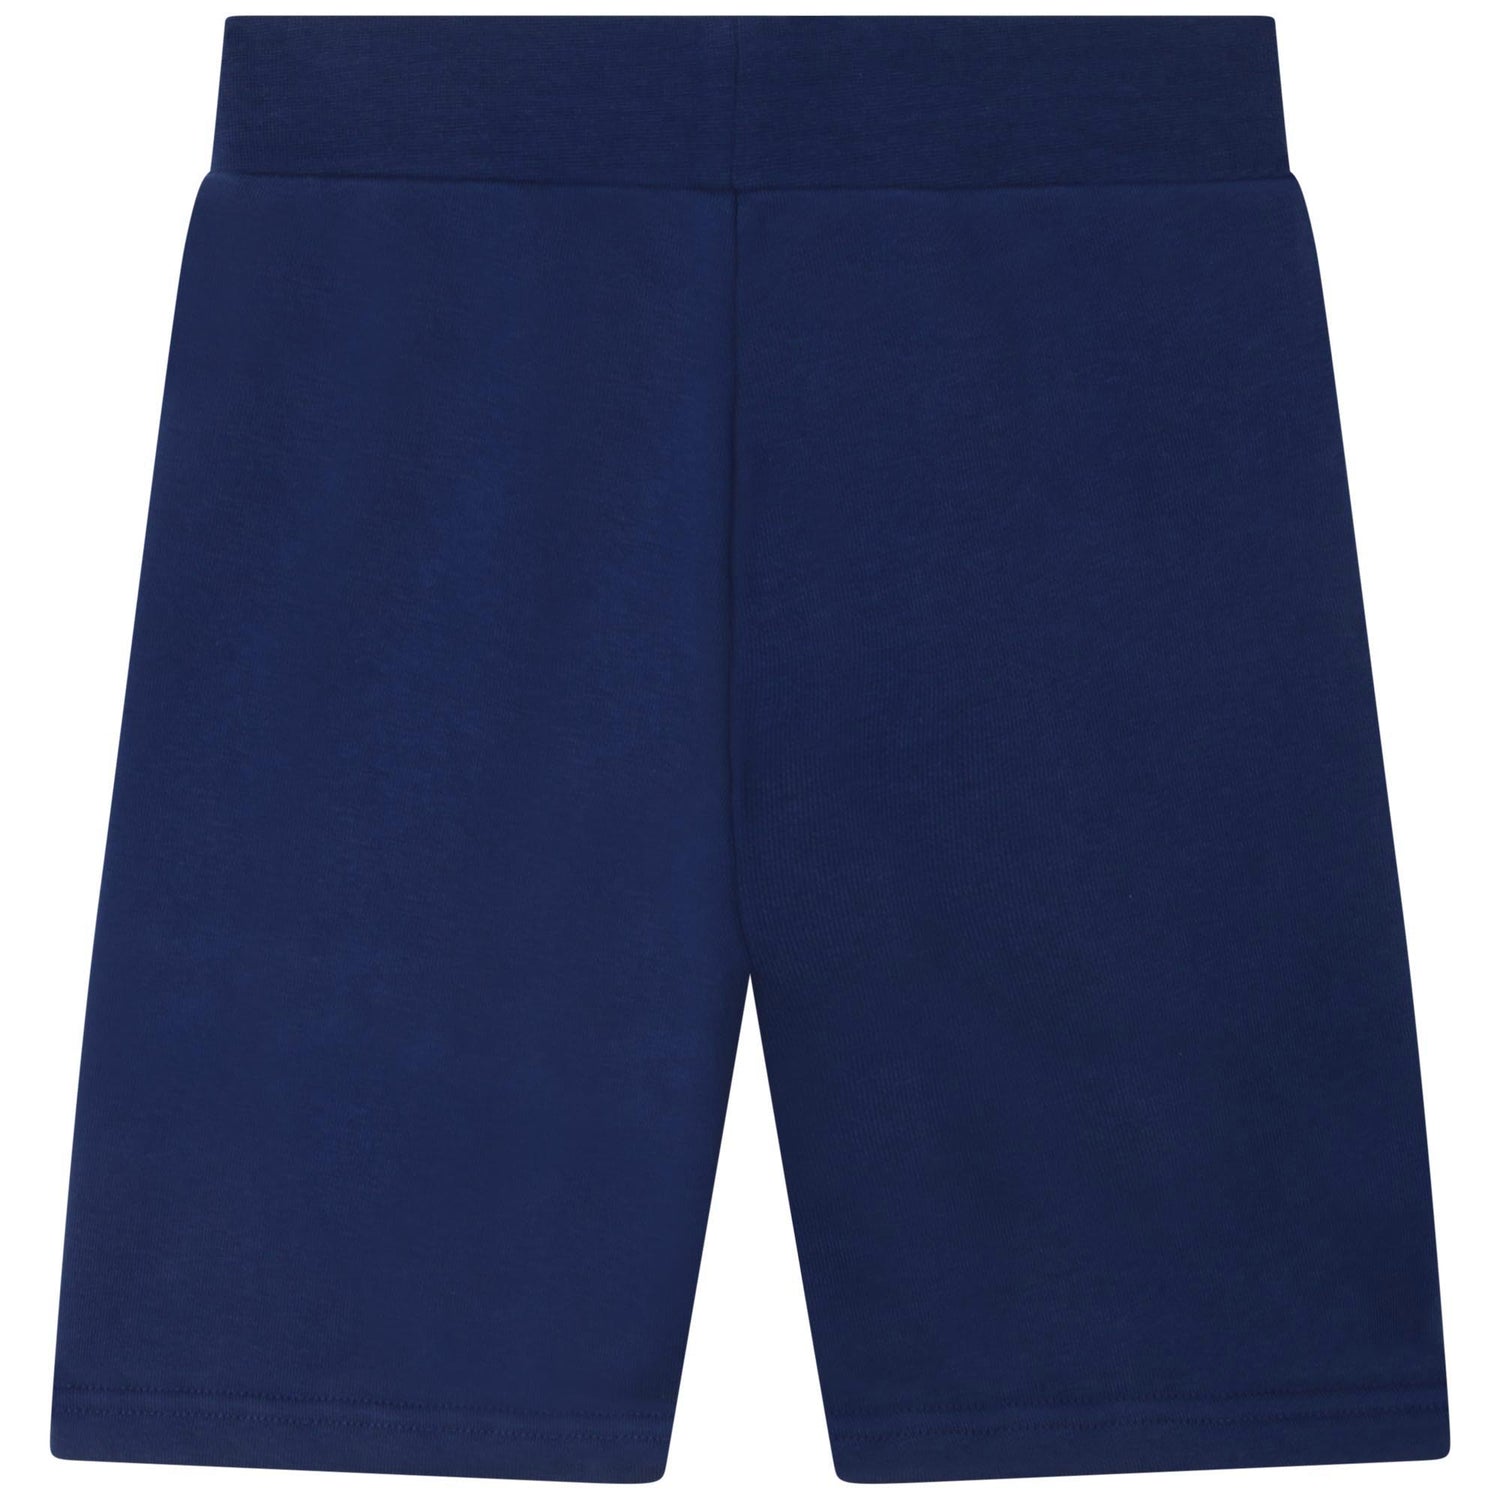 DKNY Bermuda Shorts Style: D24785